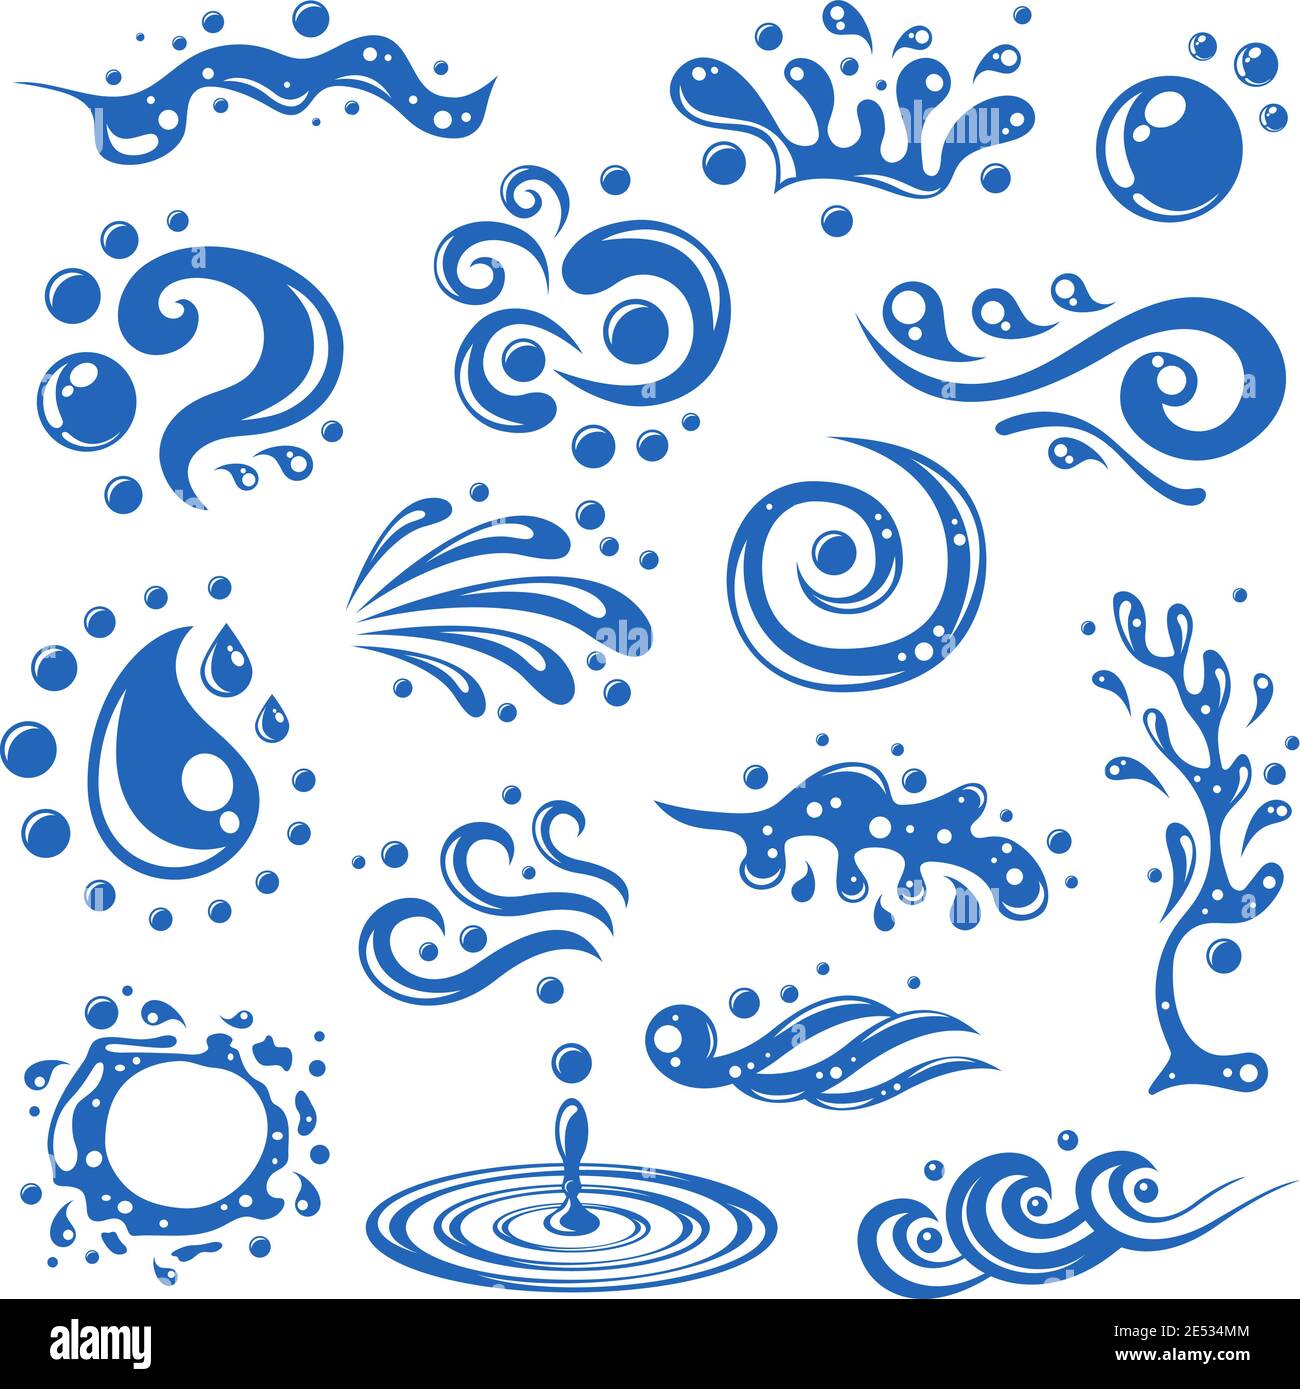 Azul agua salpicaduras olas gotas manchas iconos decorativos vector aislado  ilustración Imagen Vector de stock - Alamy